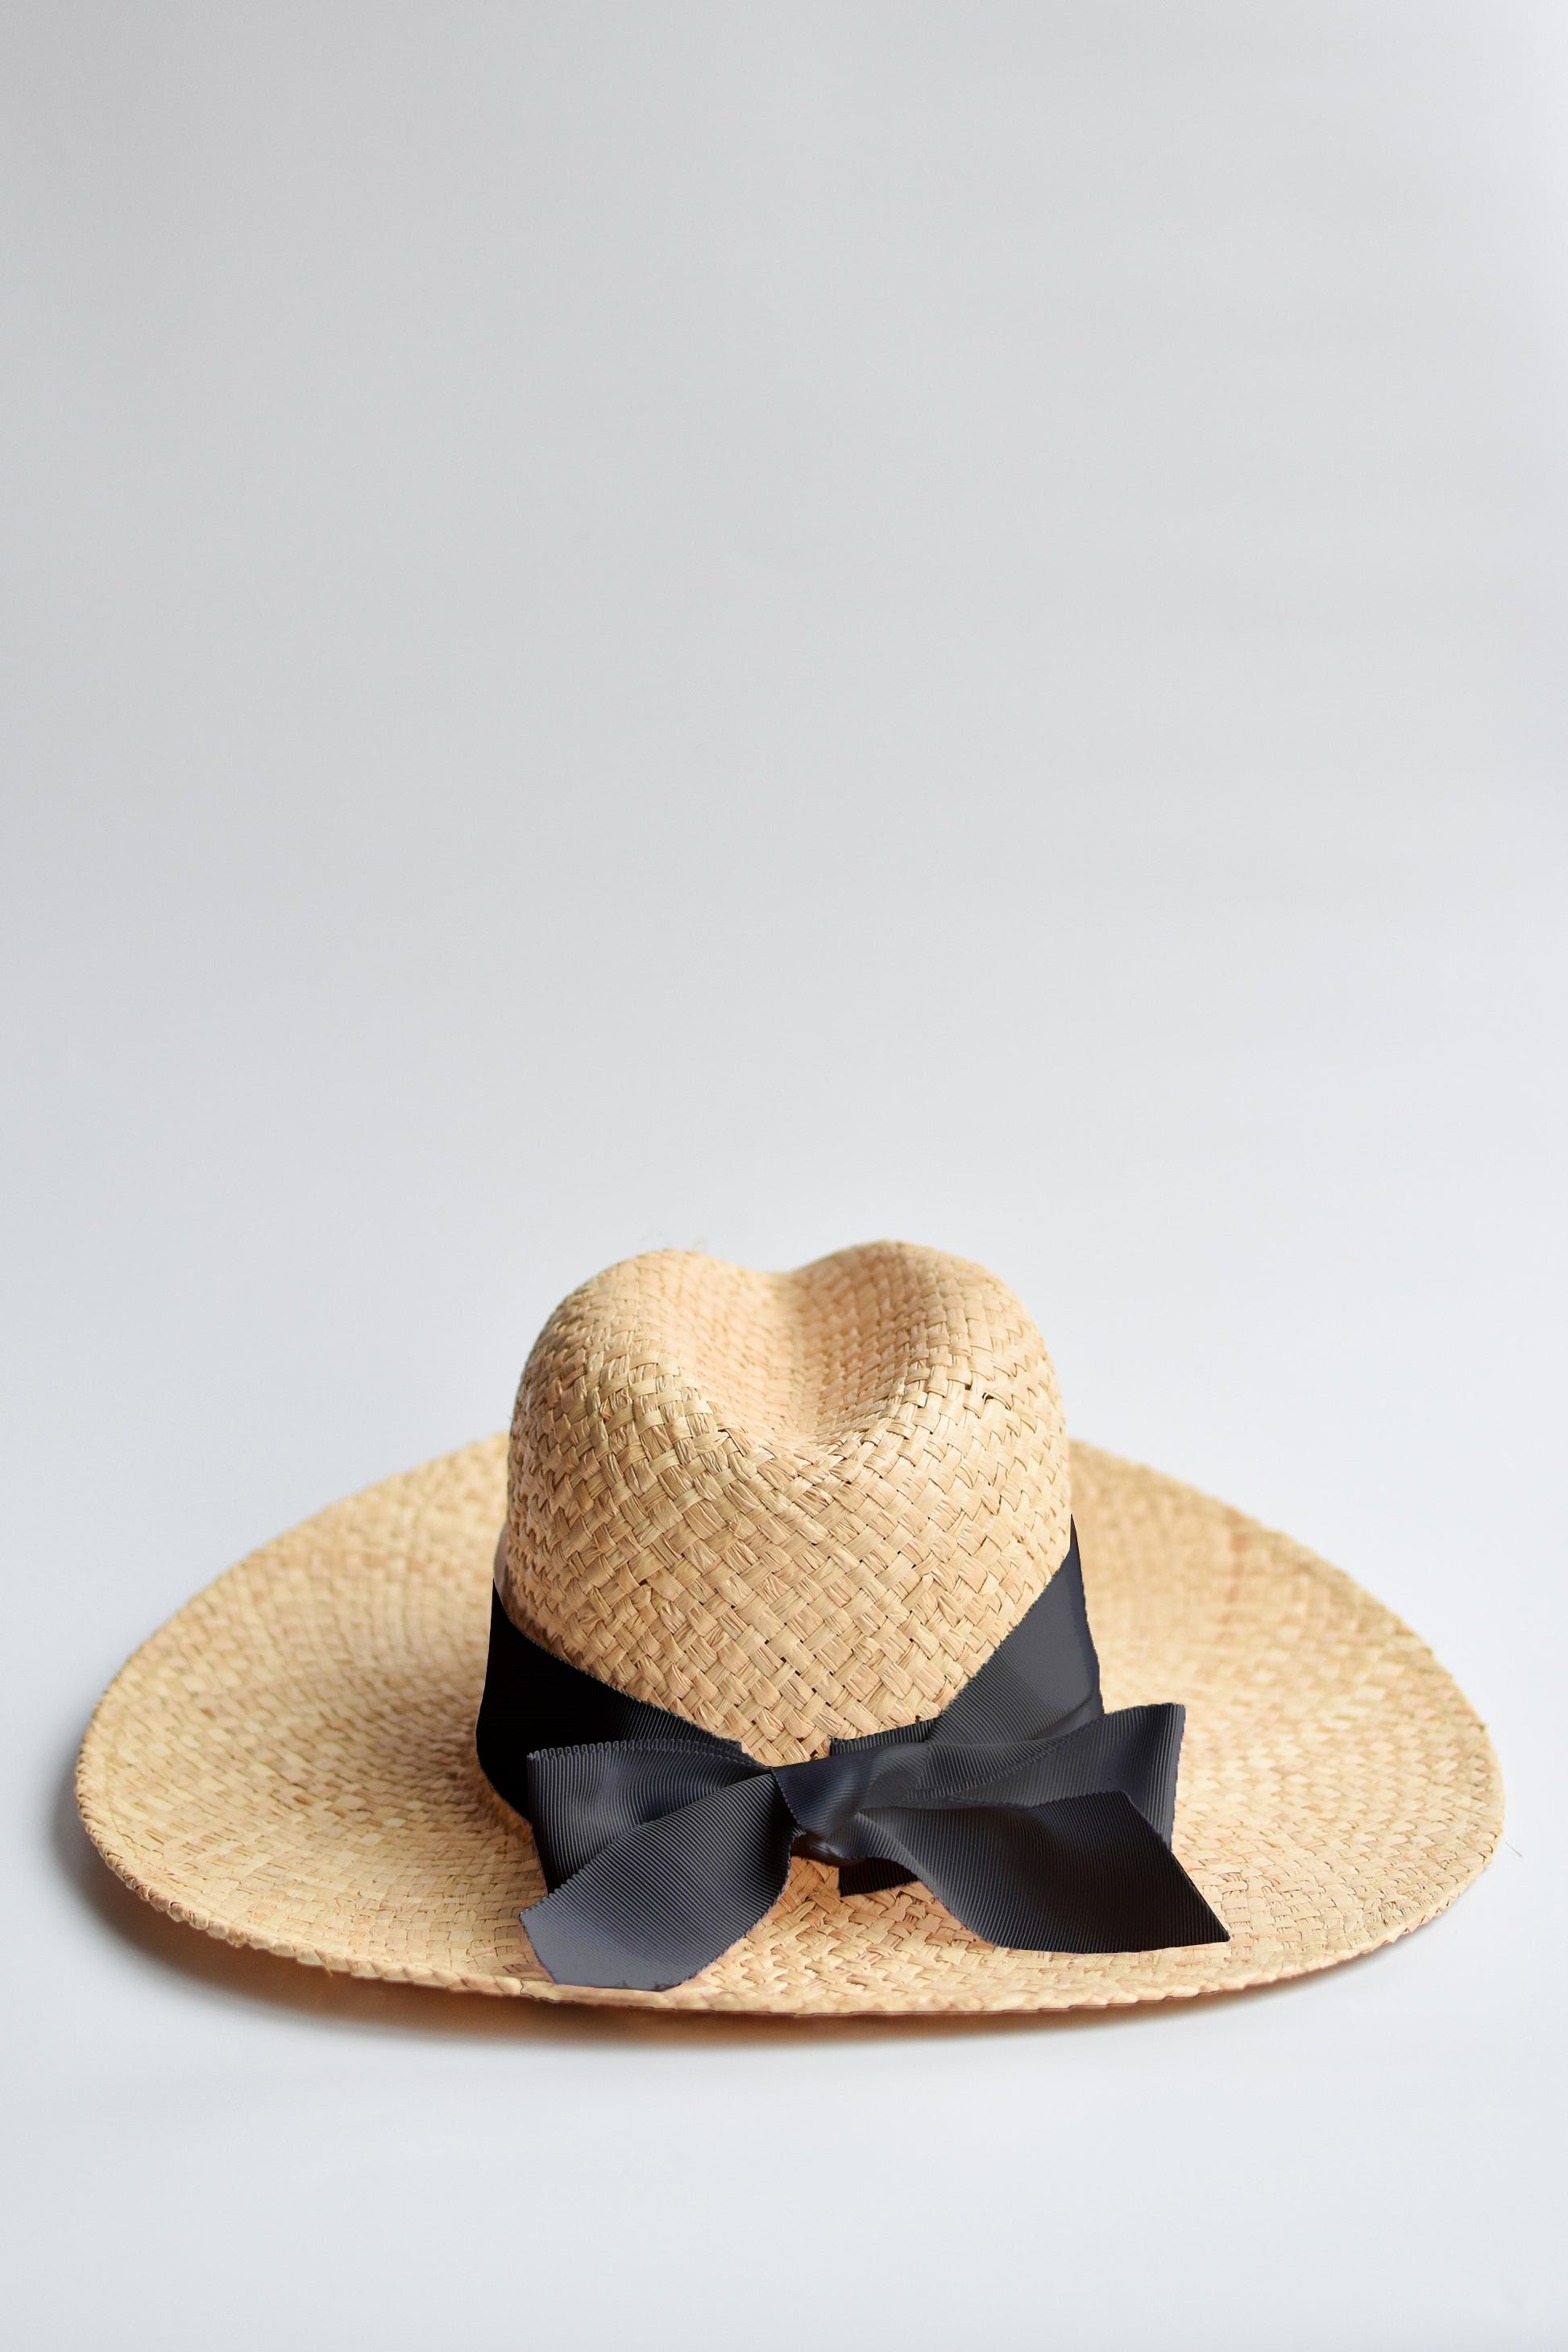 Raffia straw panama hat with black grosgrain tie